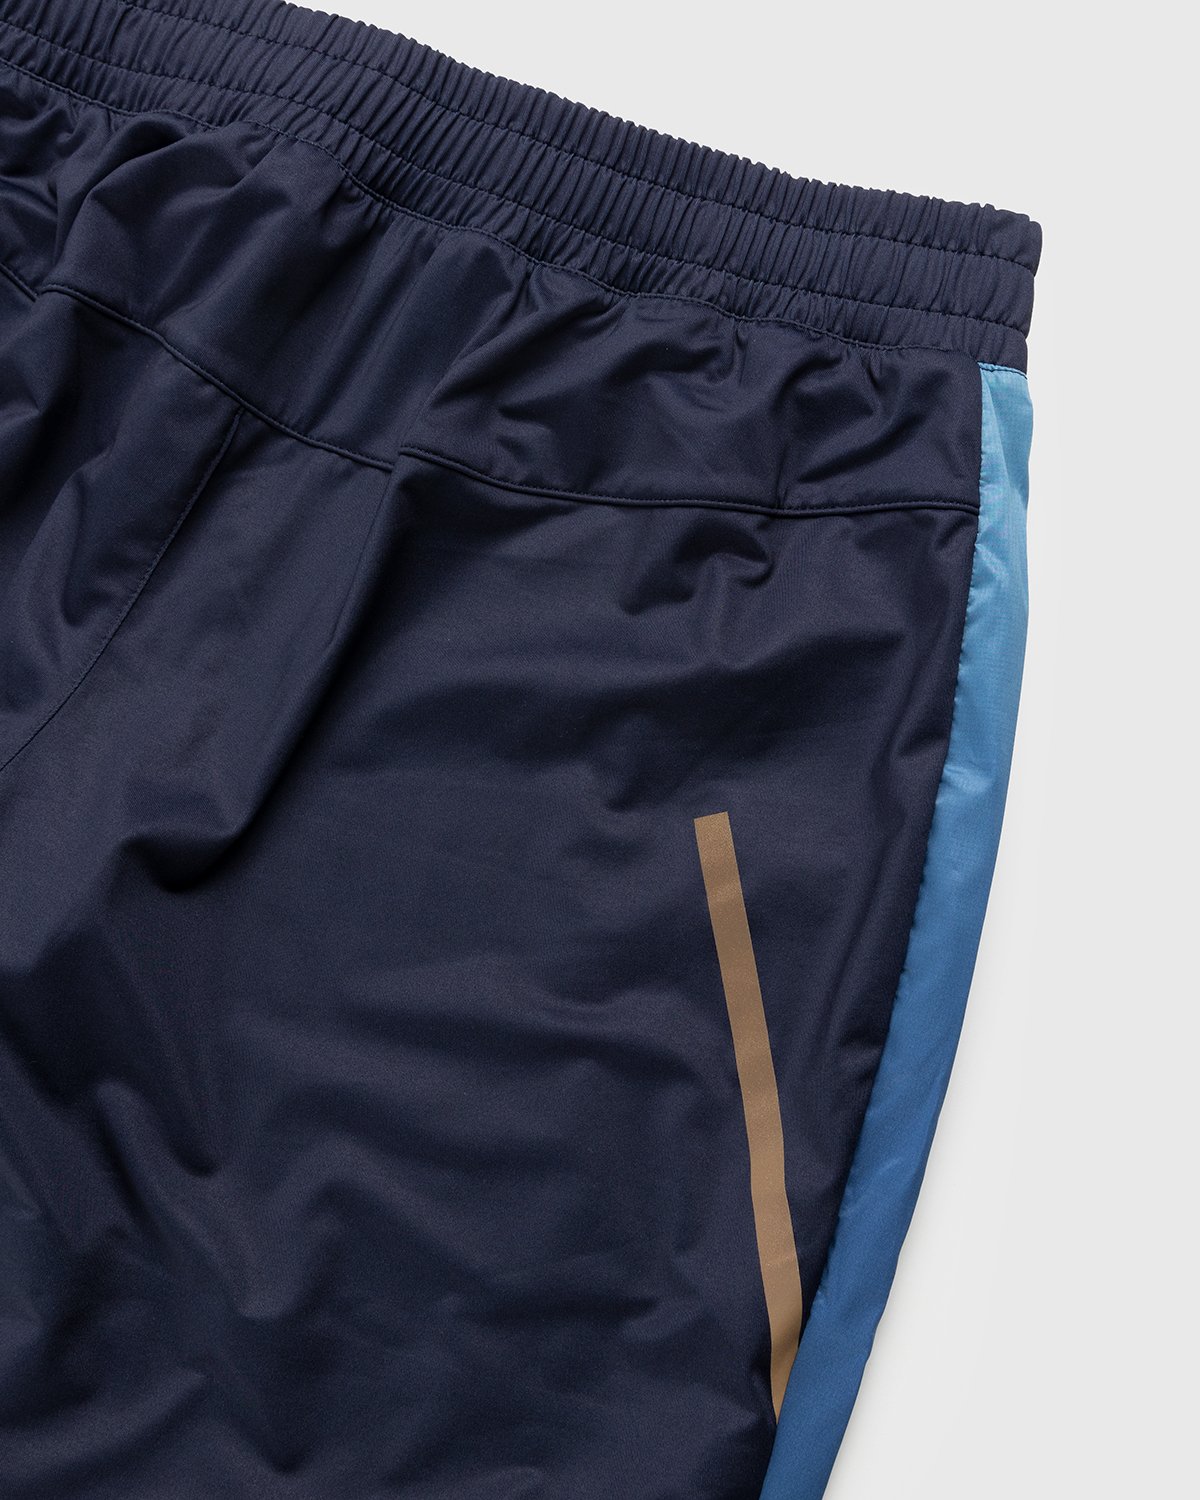 Loewe x On - Women's Technical Running Pants Gradient Blue - Clothing - Blue - Image 4